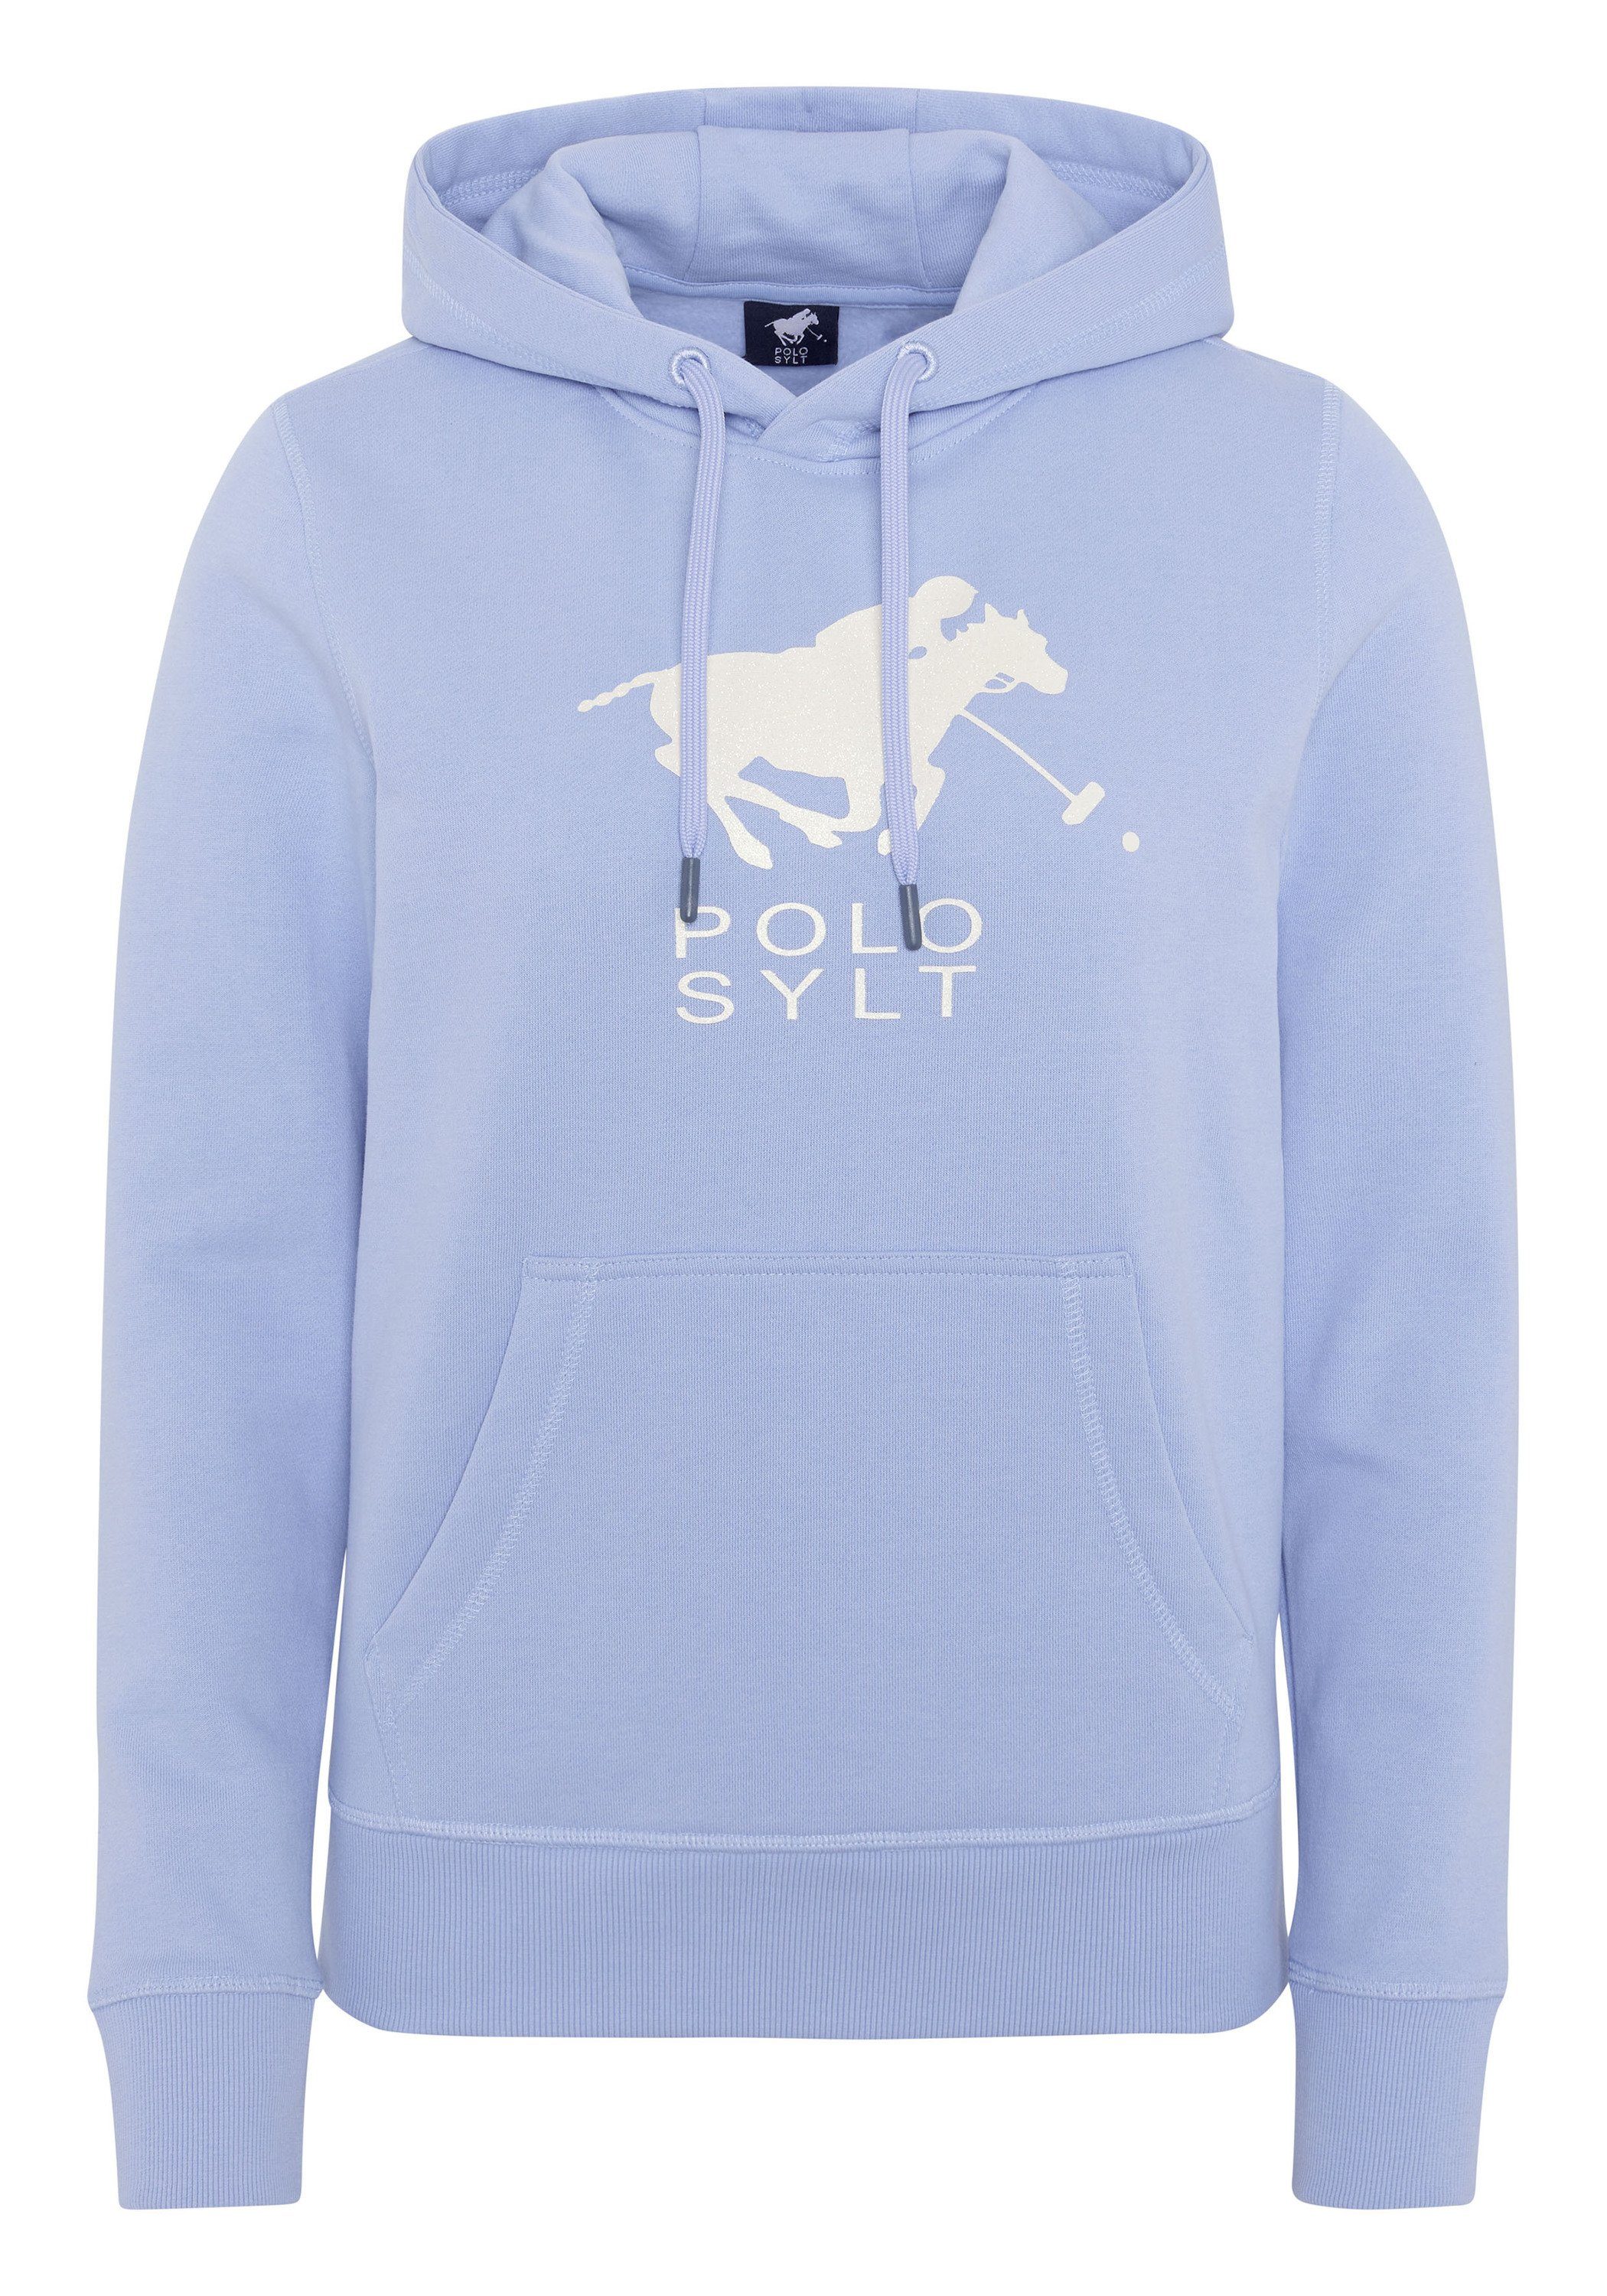 Polo mit Sylt Sylt Frontprint Kapuzensweatshirt Blue Brunnera Polo